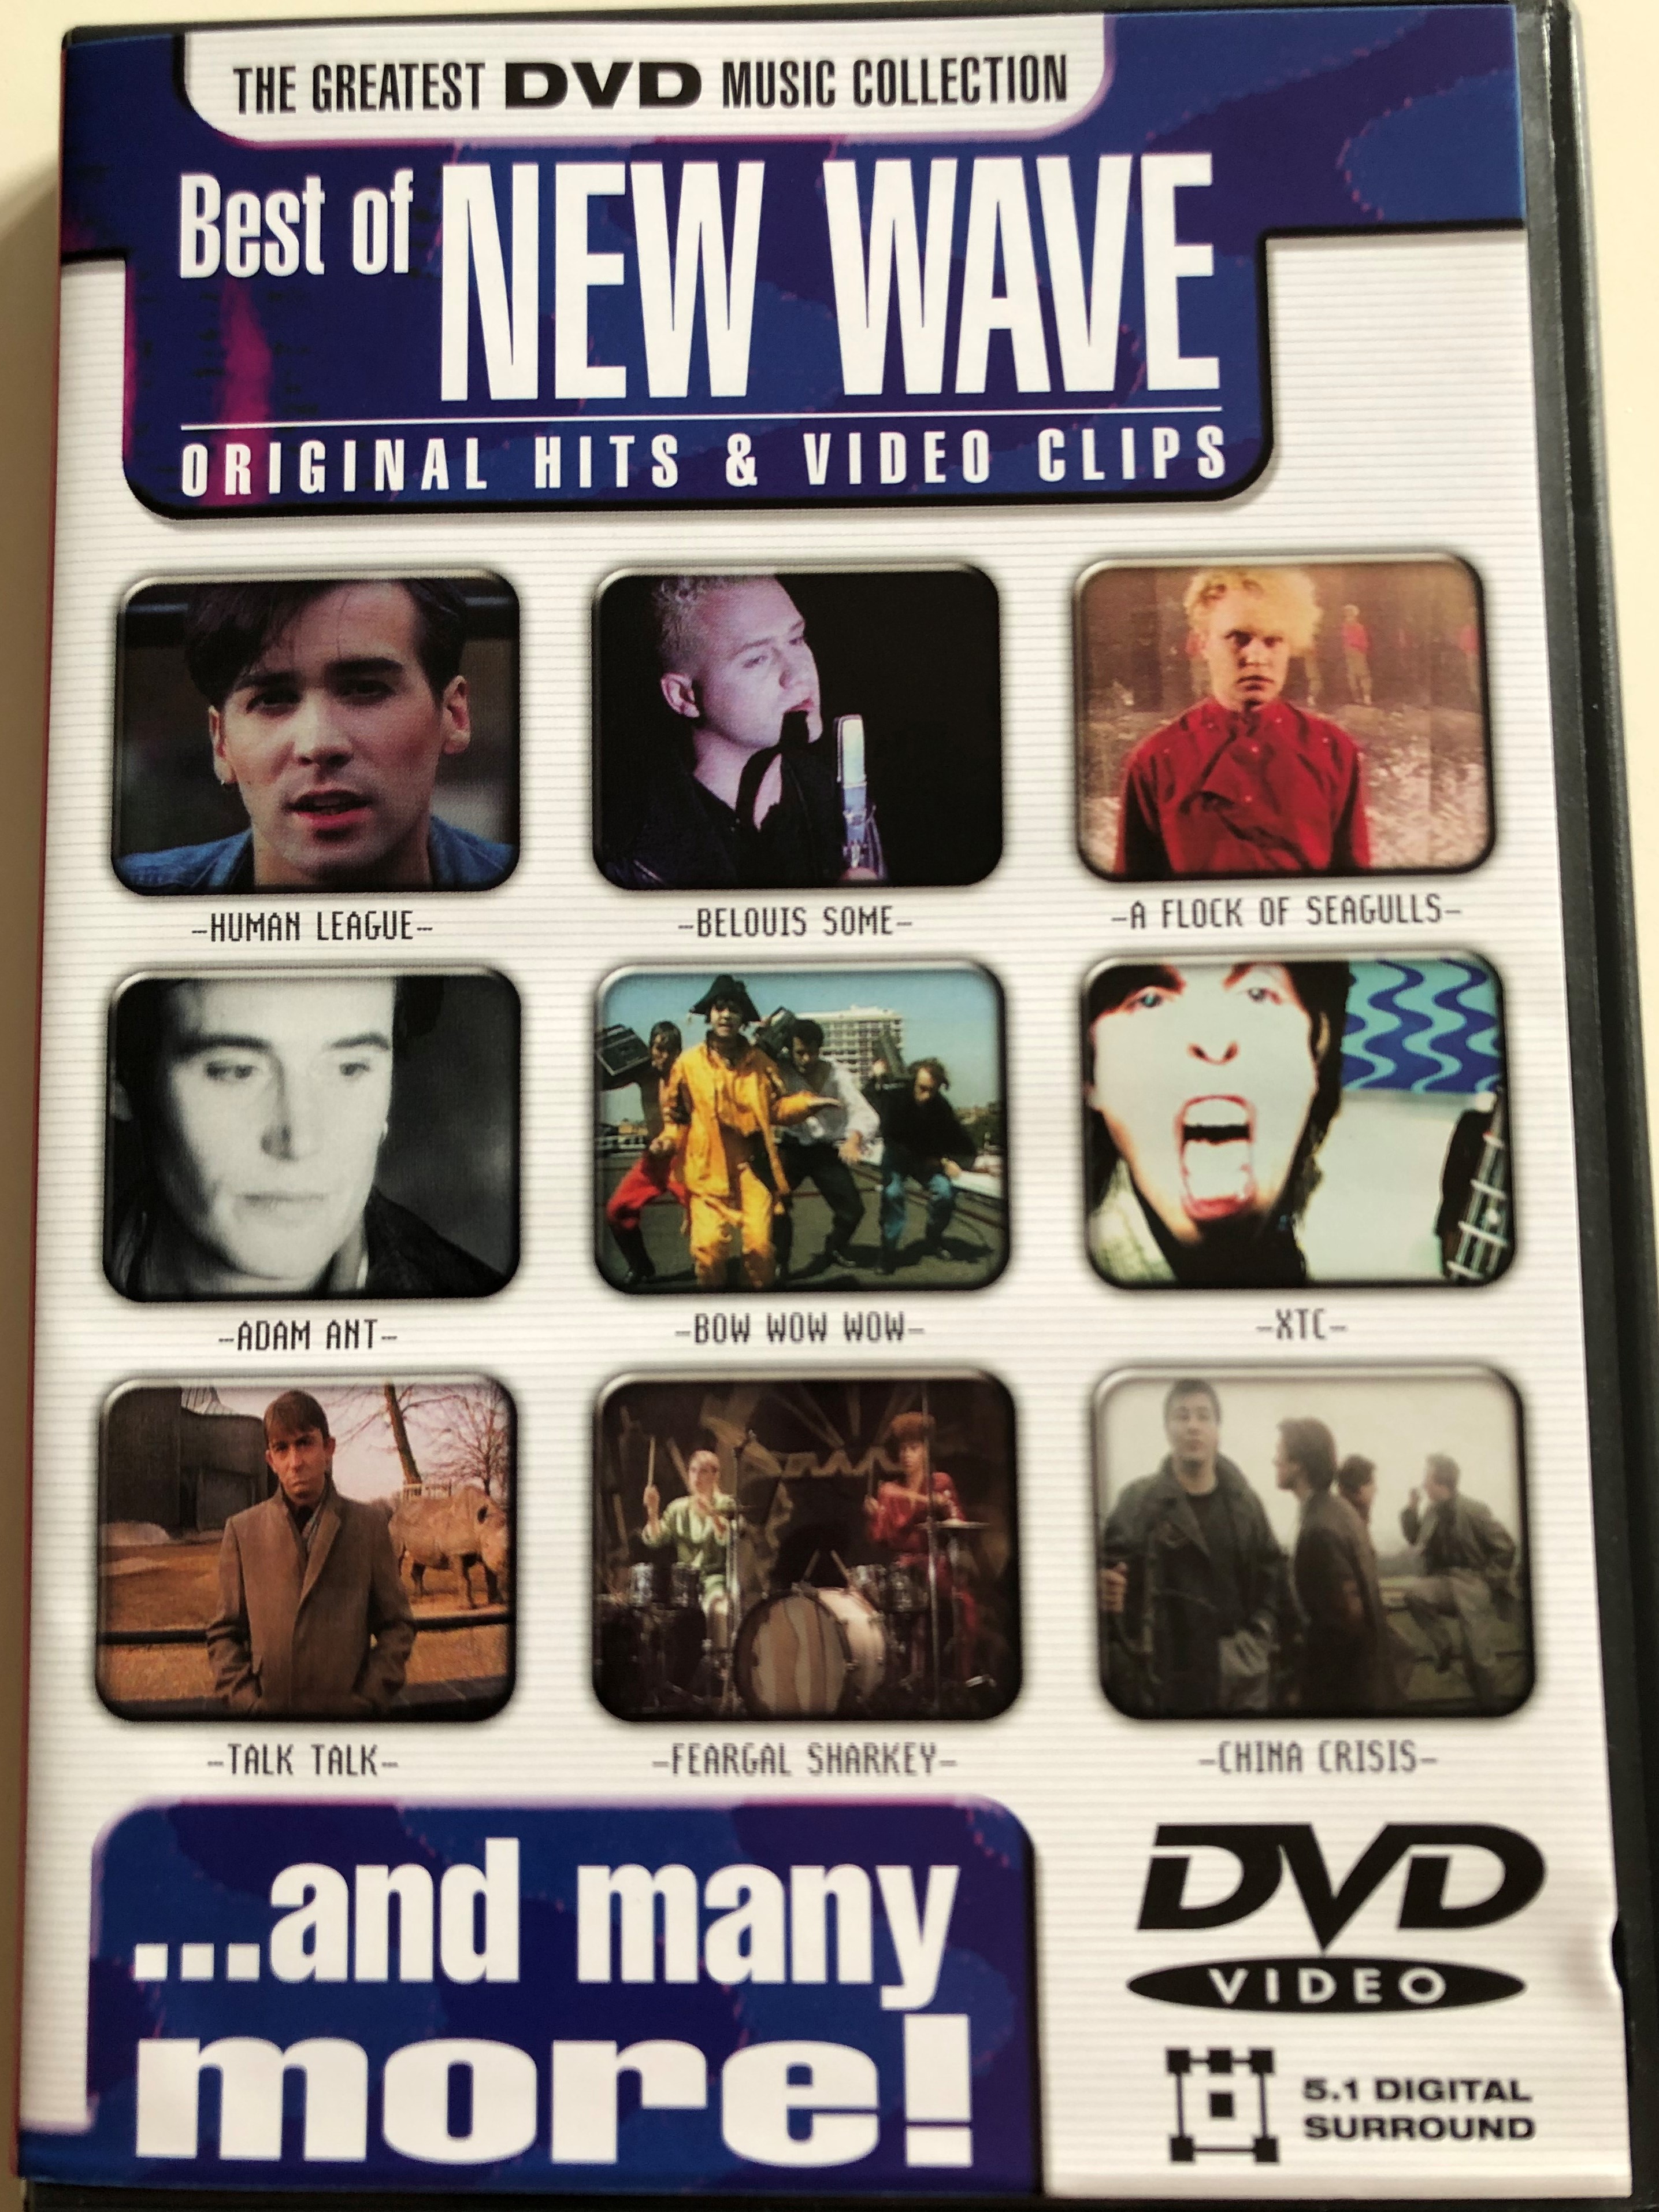 best-of-new-wave-dvd-2001-original-hits-video-clips-human-league-belouis-some-a-flock-of-seagulls-adam-ant-bow-wow-wow-xtc-talk-talk-feargal-sharkley-china-crisis-region-free-1-.jpg